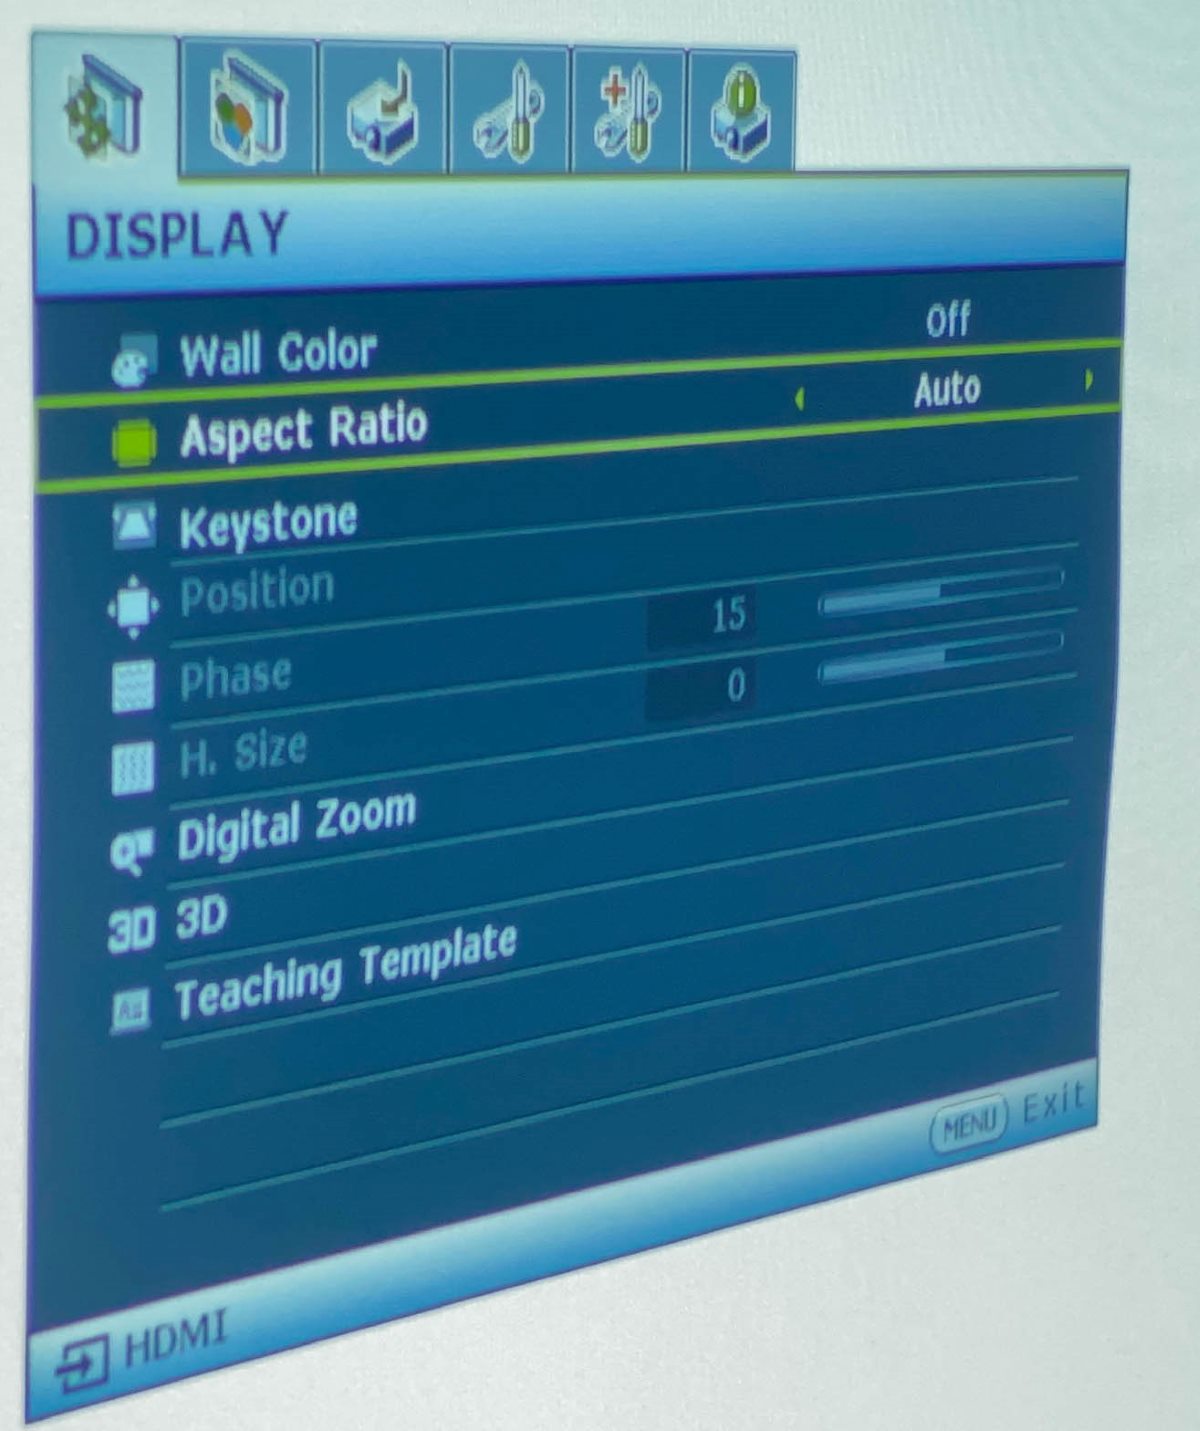 Aspect Ratio in Auto mode in the BenQ projector menu settings screen